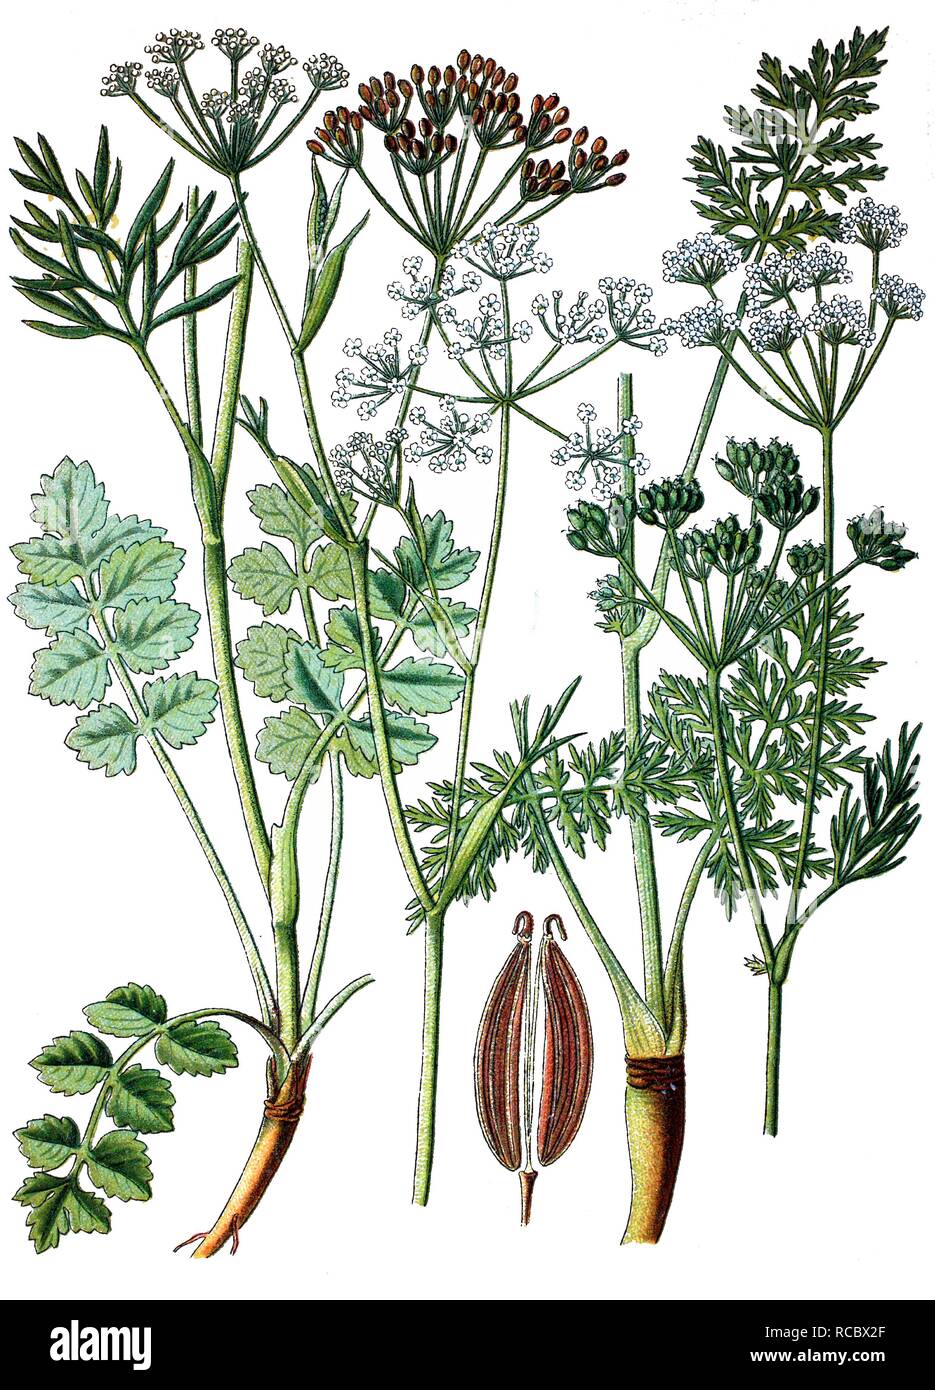 Caraway (Carum carvi), left, and Burnet Saxifrage (Pimpinella saxifraga), right, medicinal plants, historical chromolithography Stock Photo